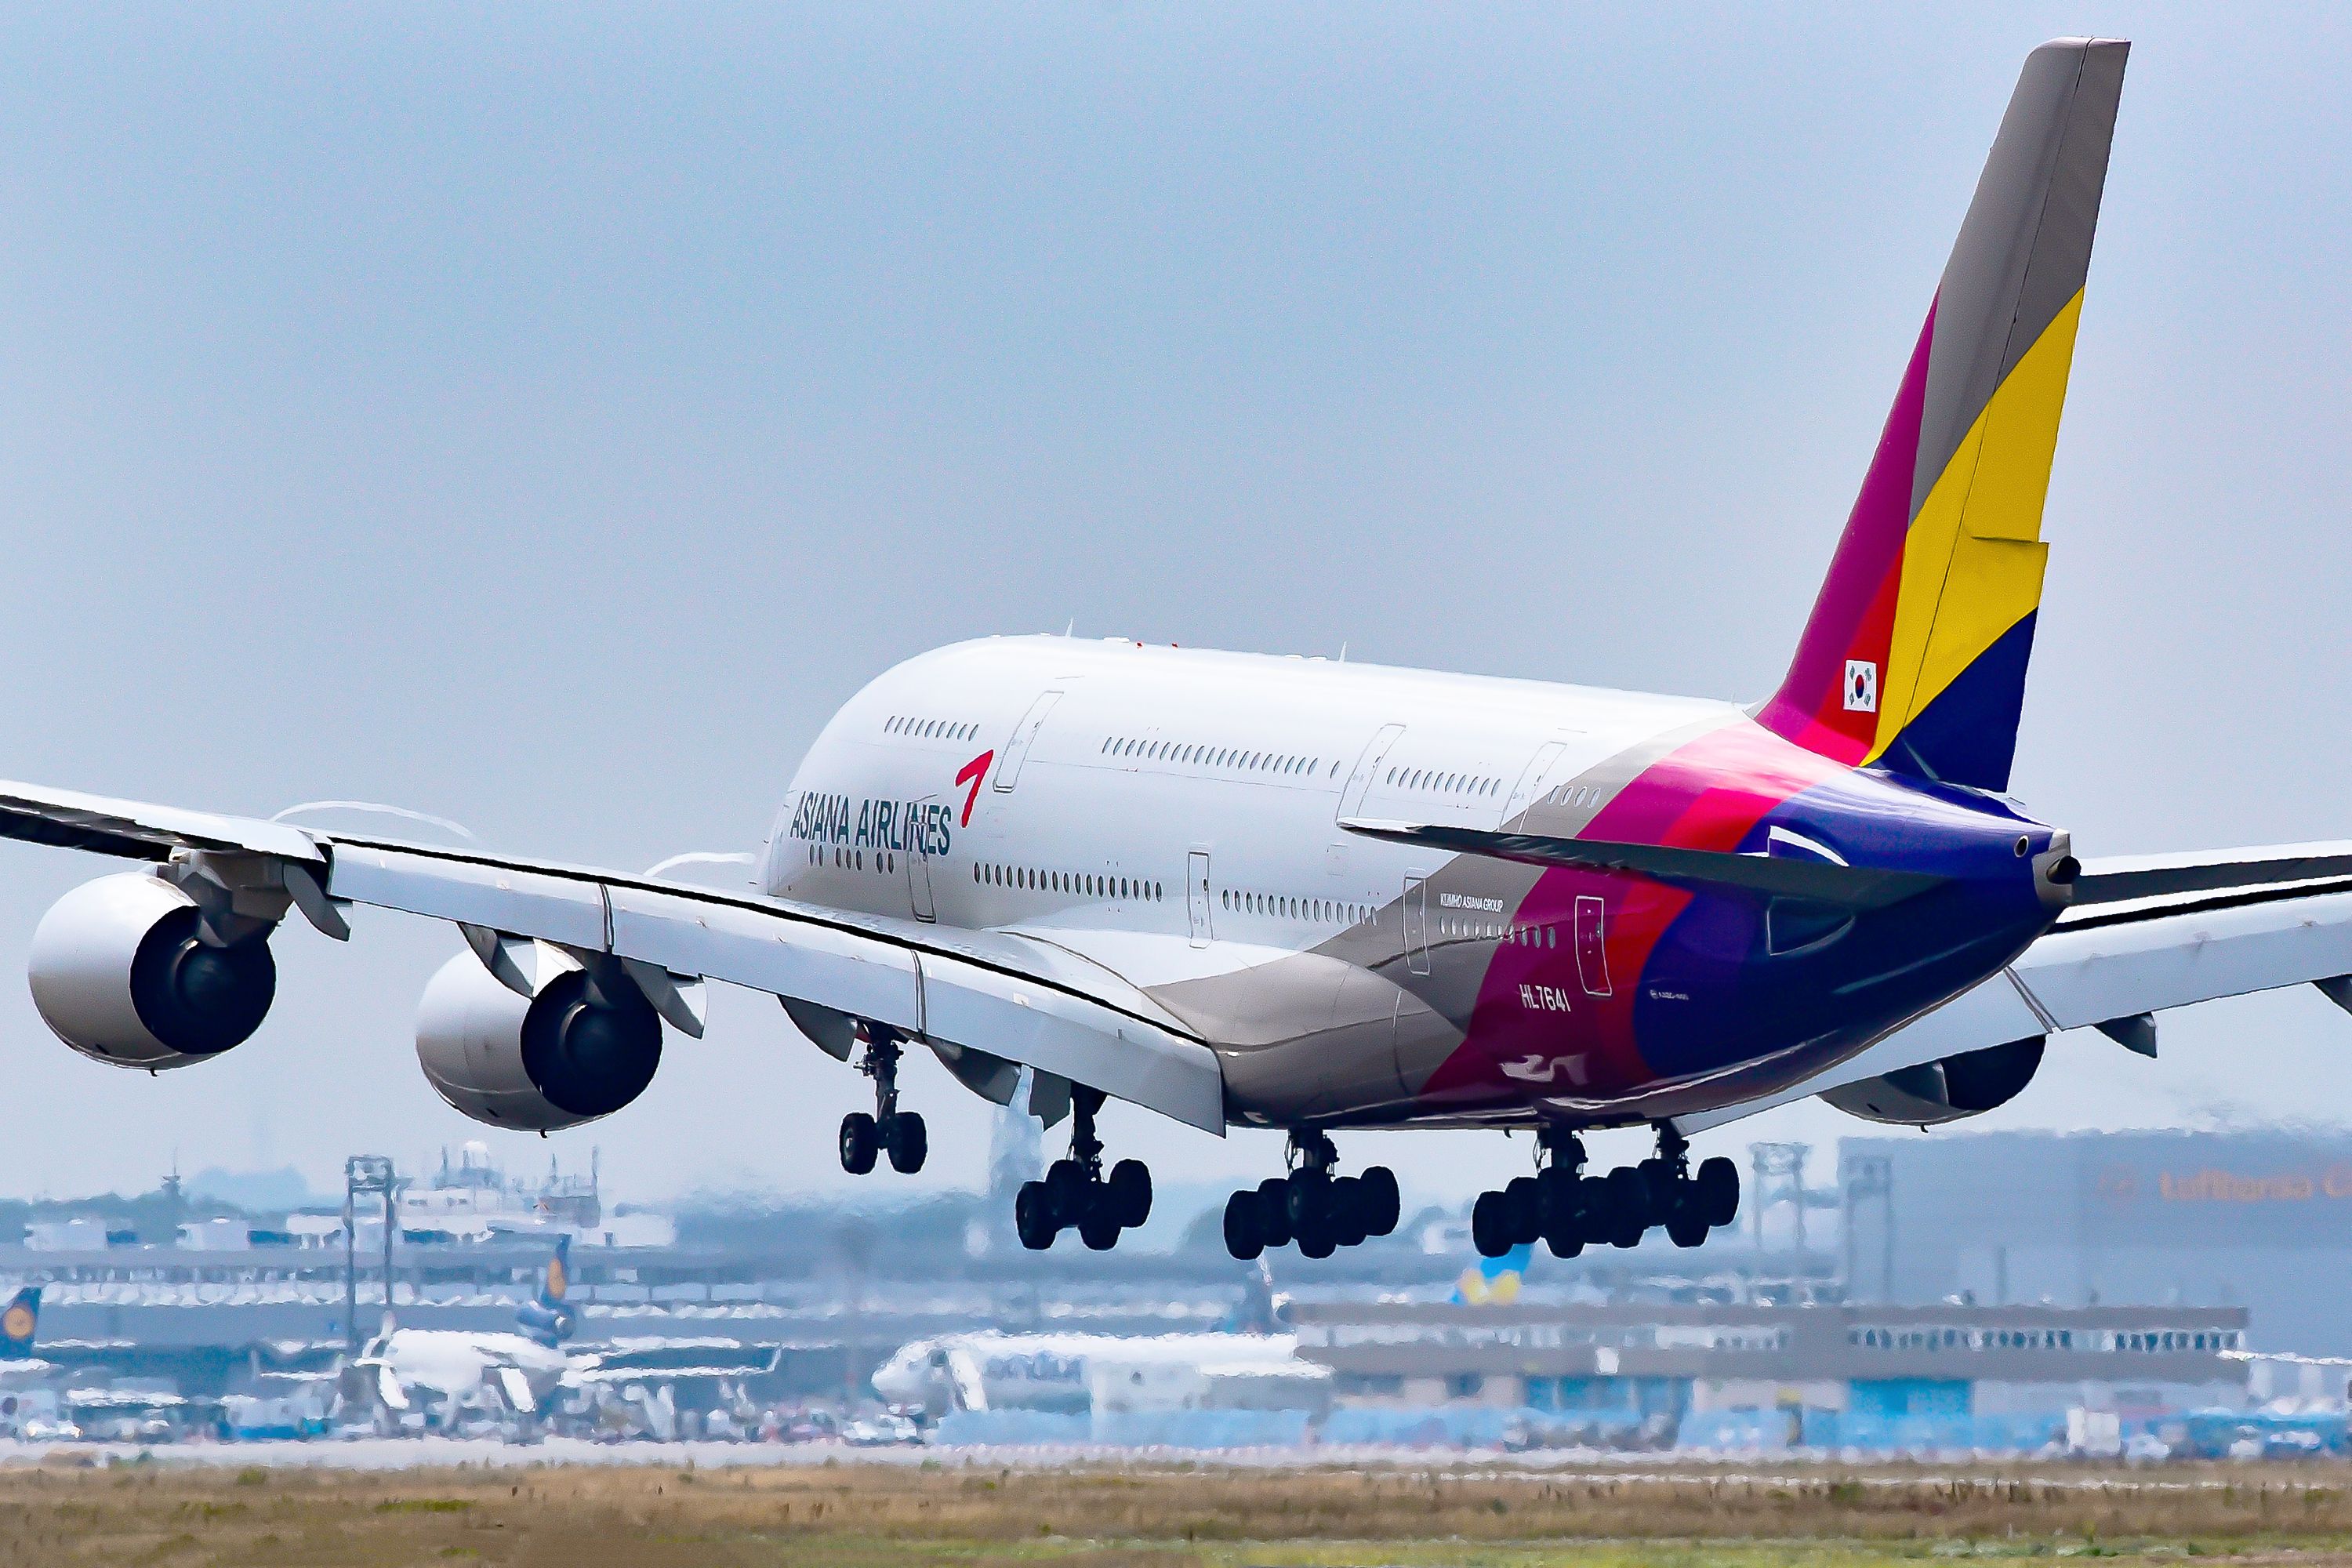 Asiana Airlines Airbus A380 landing at Frankfurt Airport